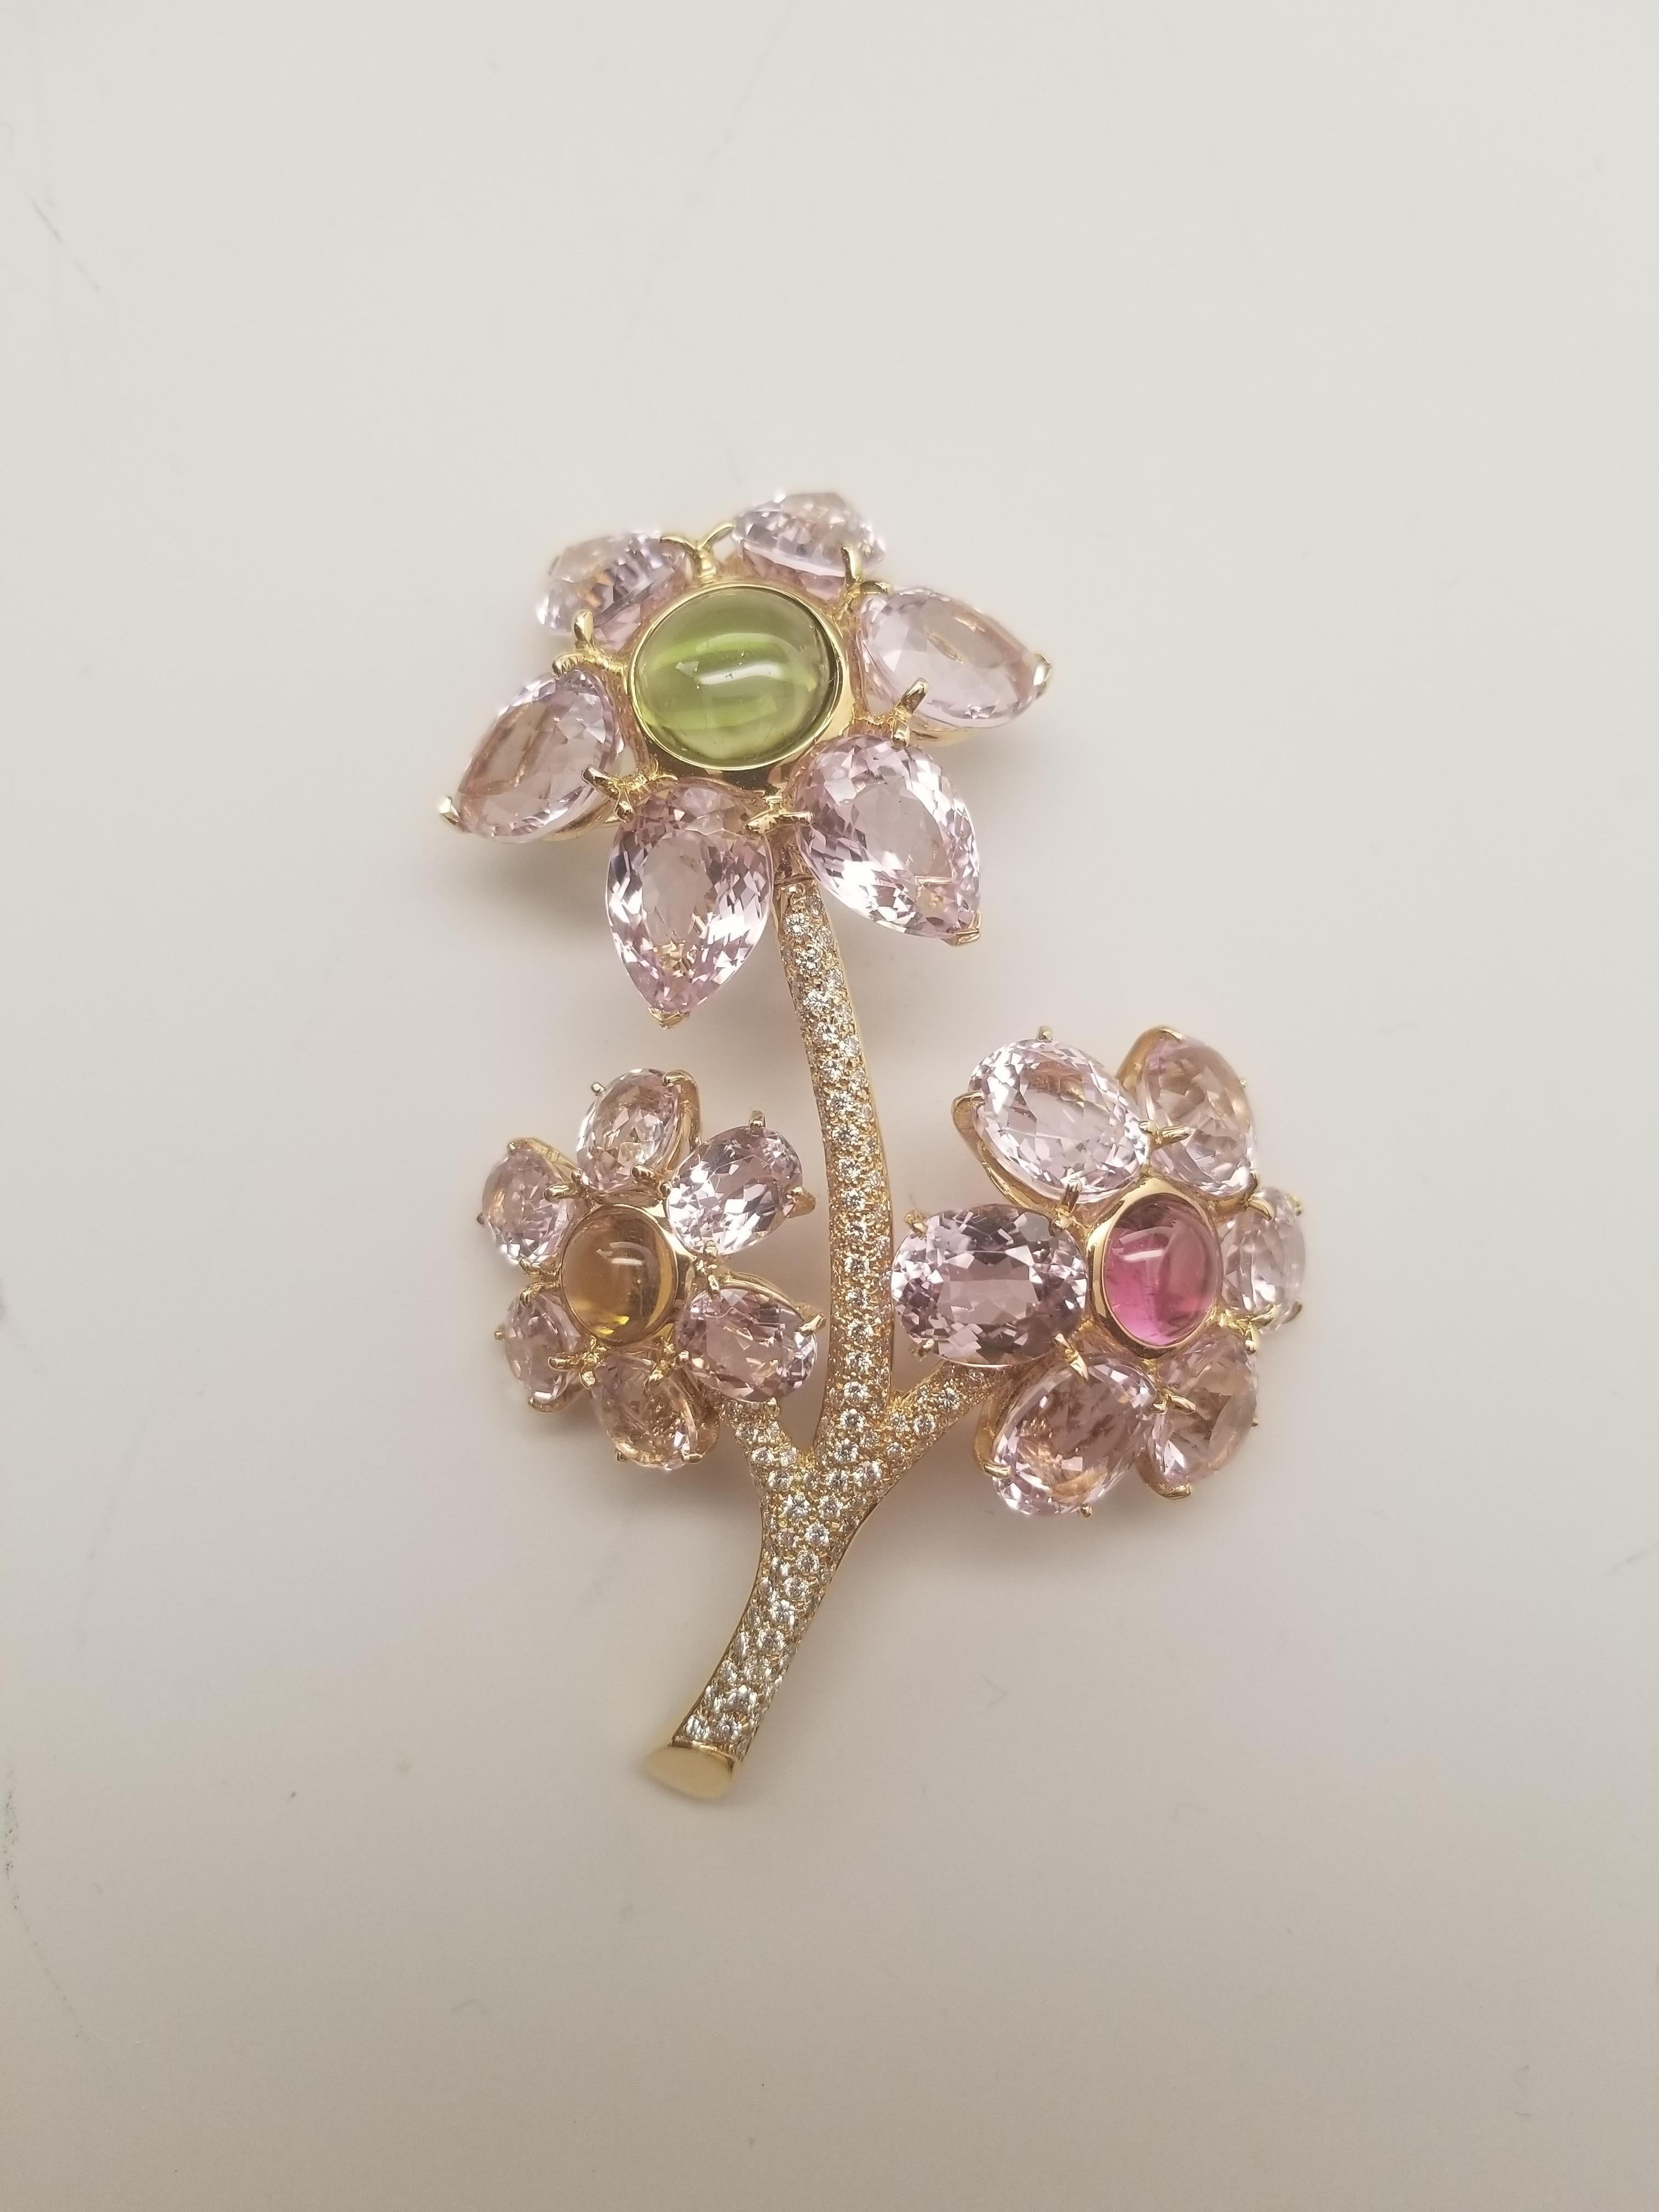 Pear Cut NEW GAL CERT Kunzite Tourmaline Diamond Flower Brooch 18K Gold LFPARIS Mark For Sale